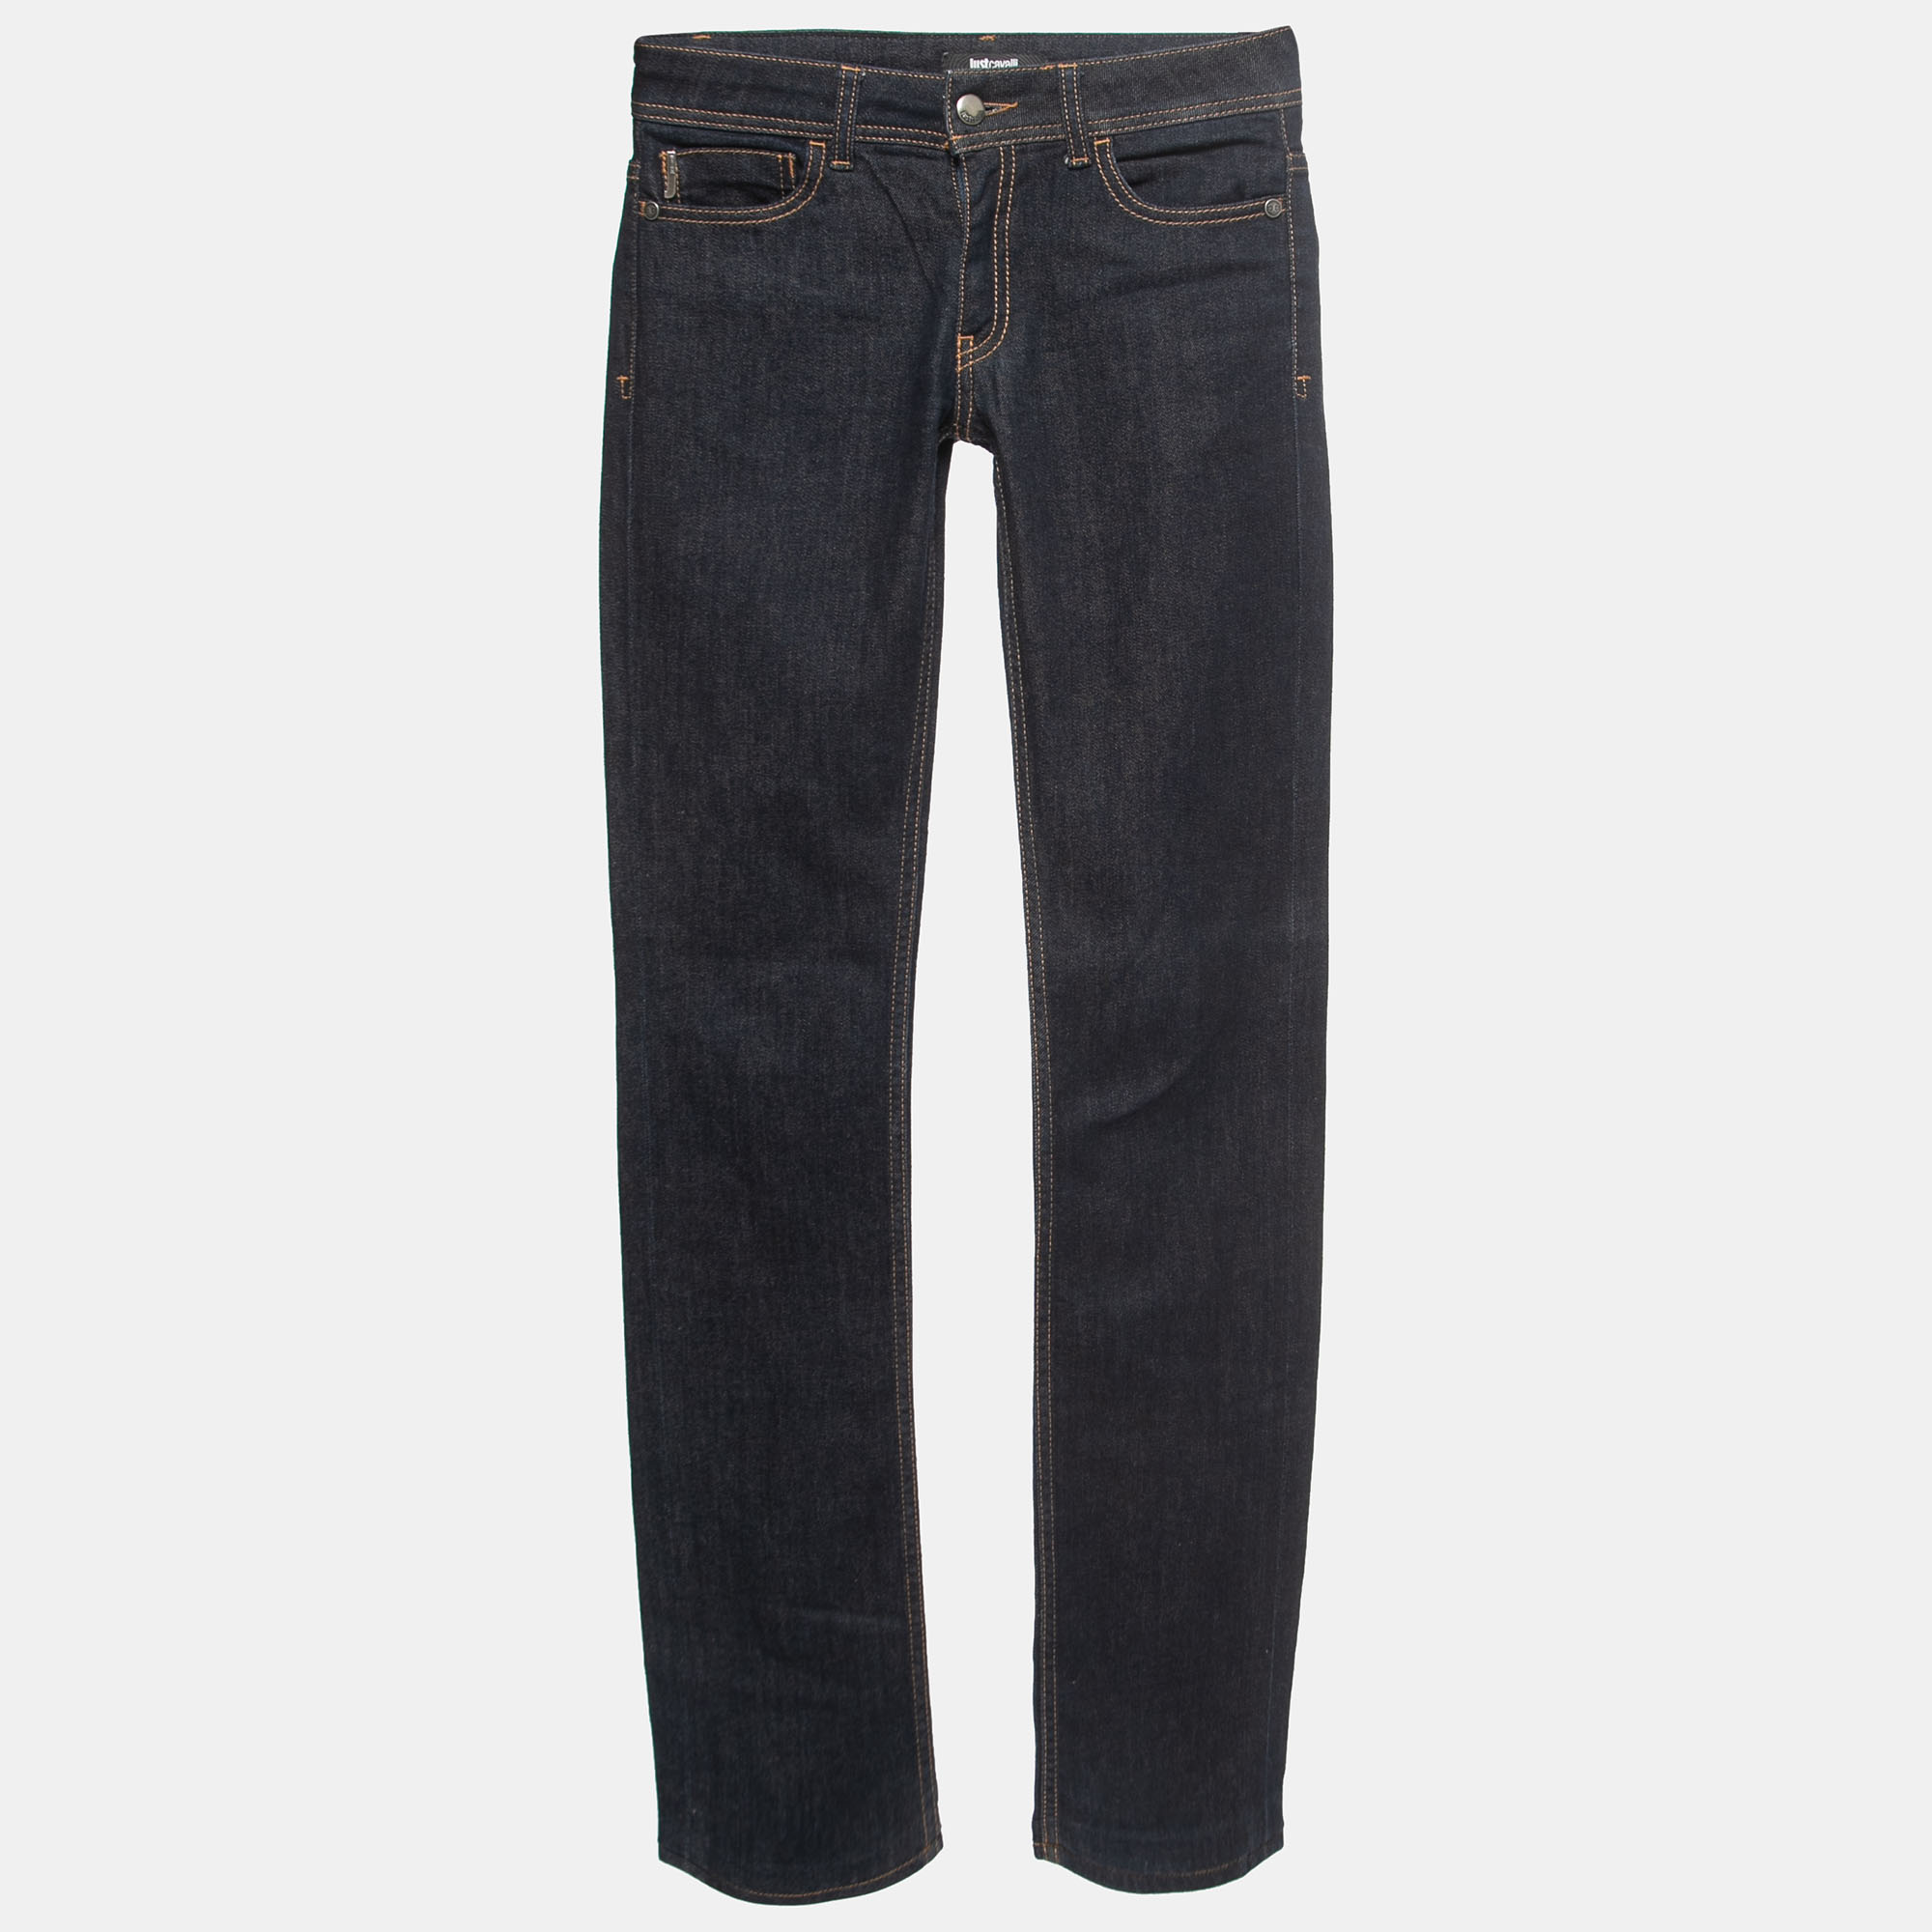 Pre-owned Just Cavalli Dark Blue Denim Flared Jeans S Waist 25"